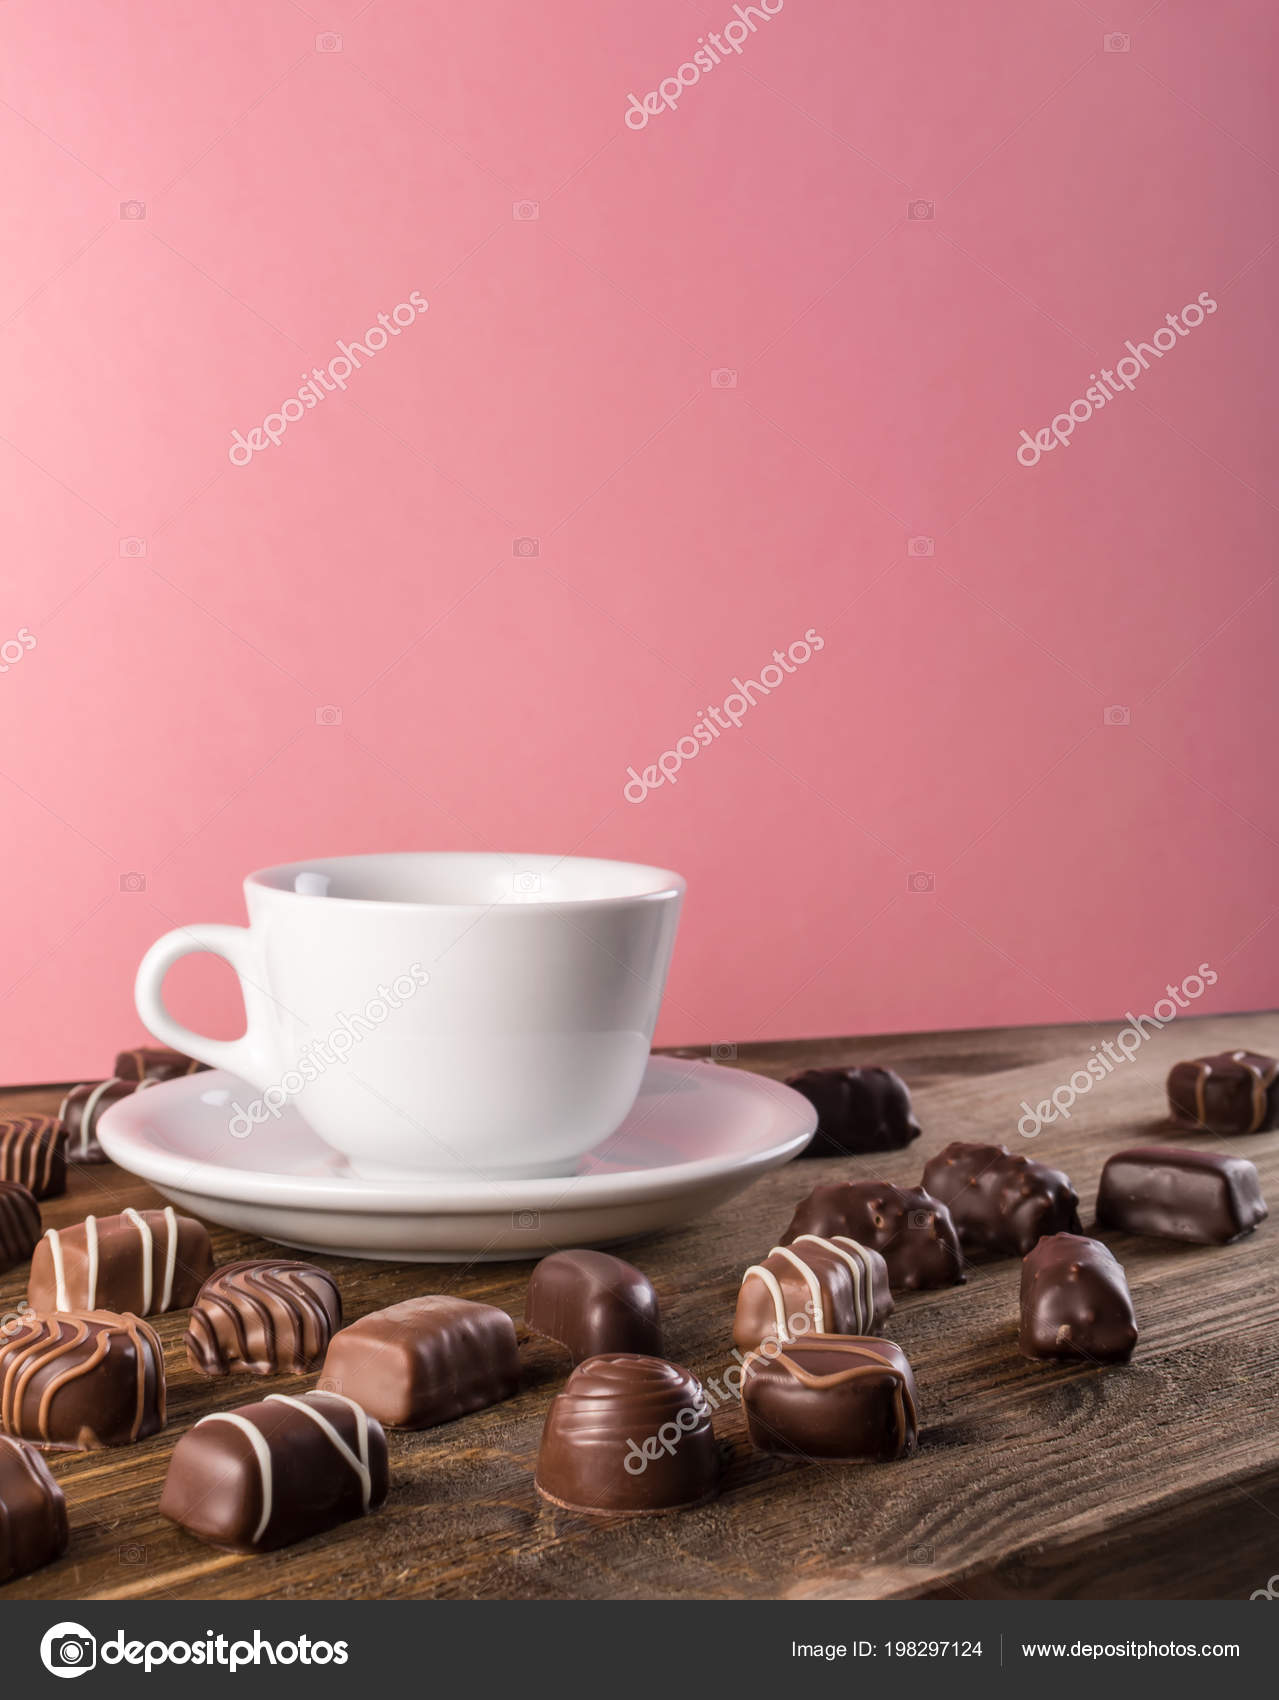 Beautiful Creative Chocolate Sweets Wooden Background Mix Chocolates Coffee Cup Stock Photo Image By C Oksana6299956 198297124